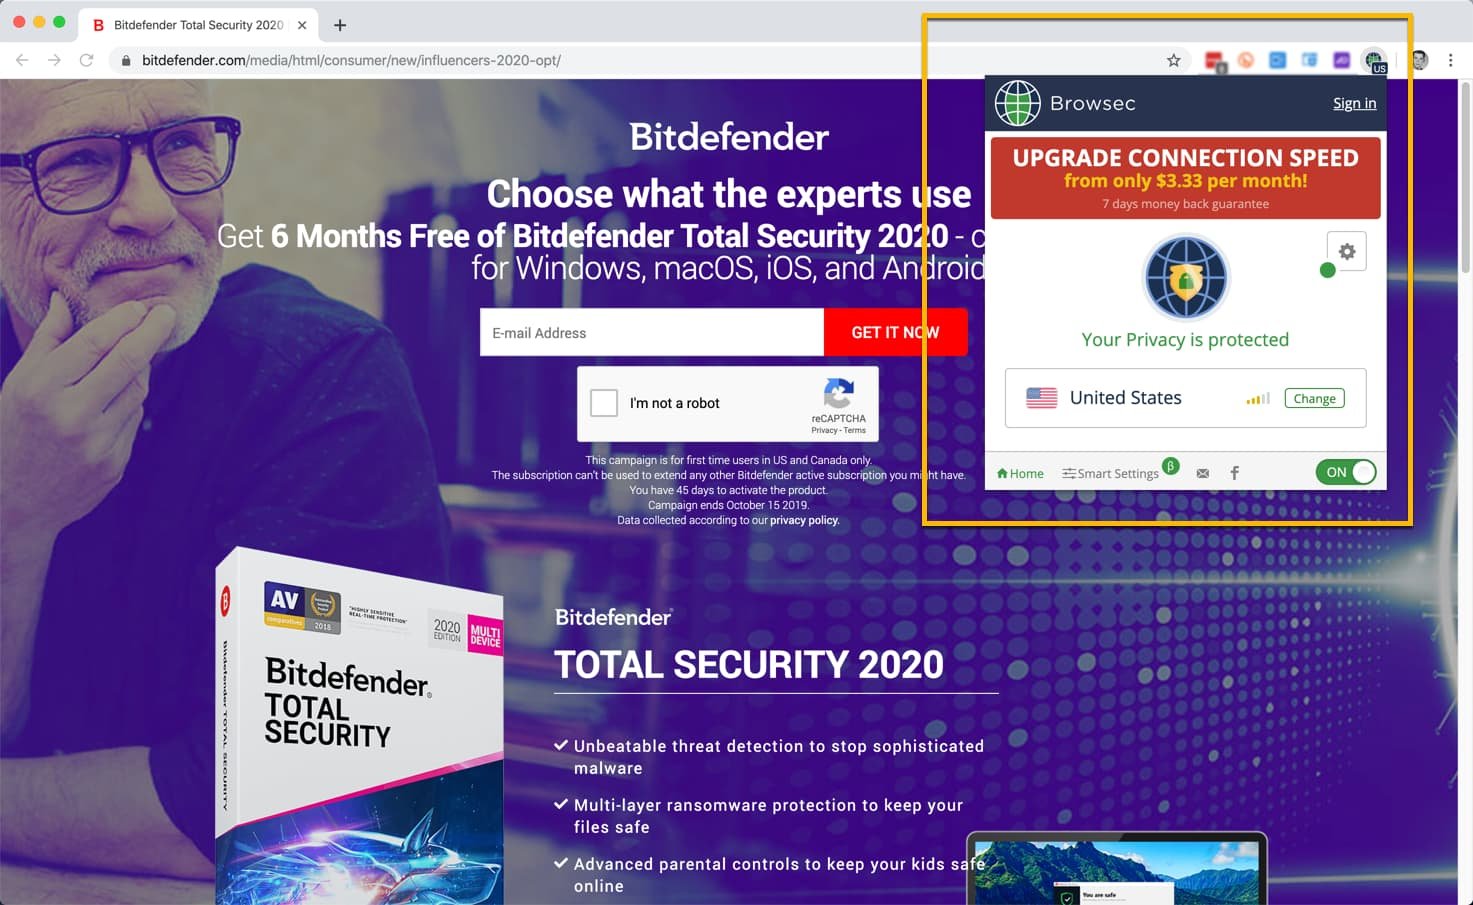 Bitdefender Total Security 2020 Deals